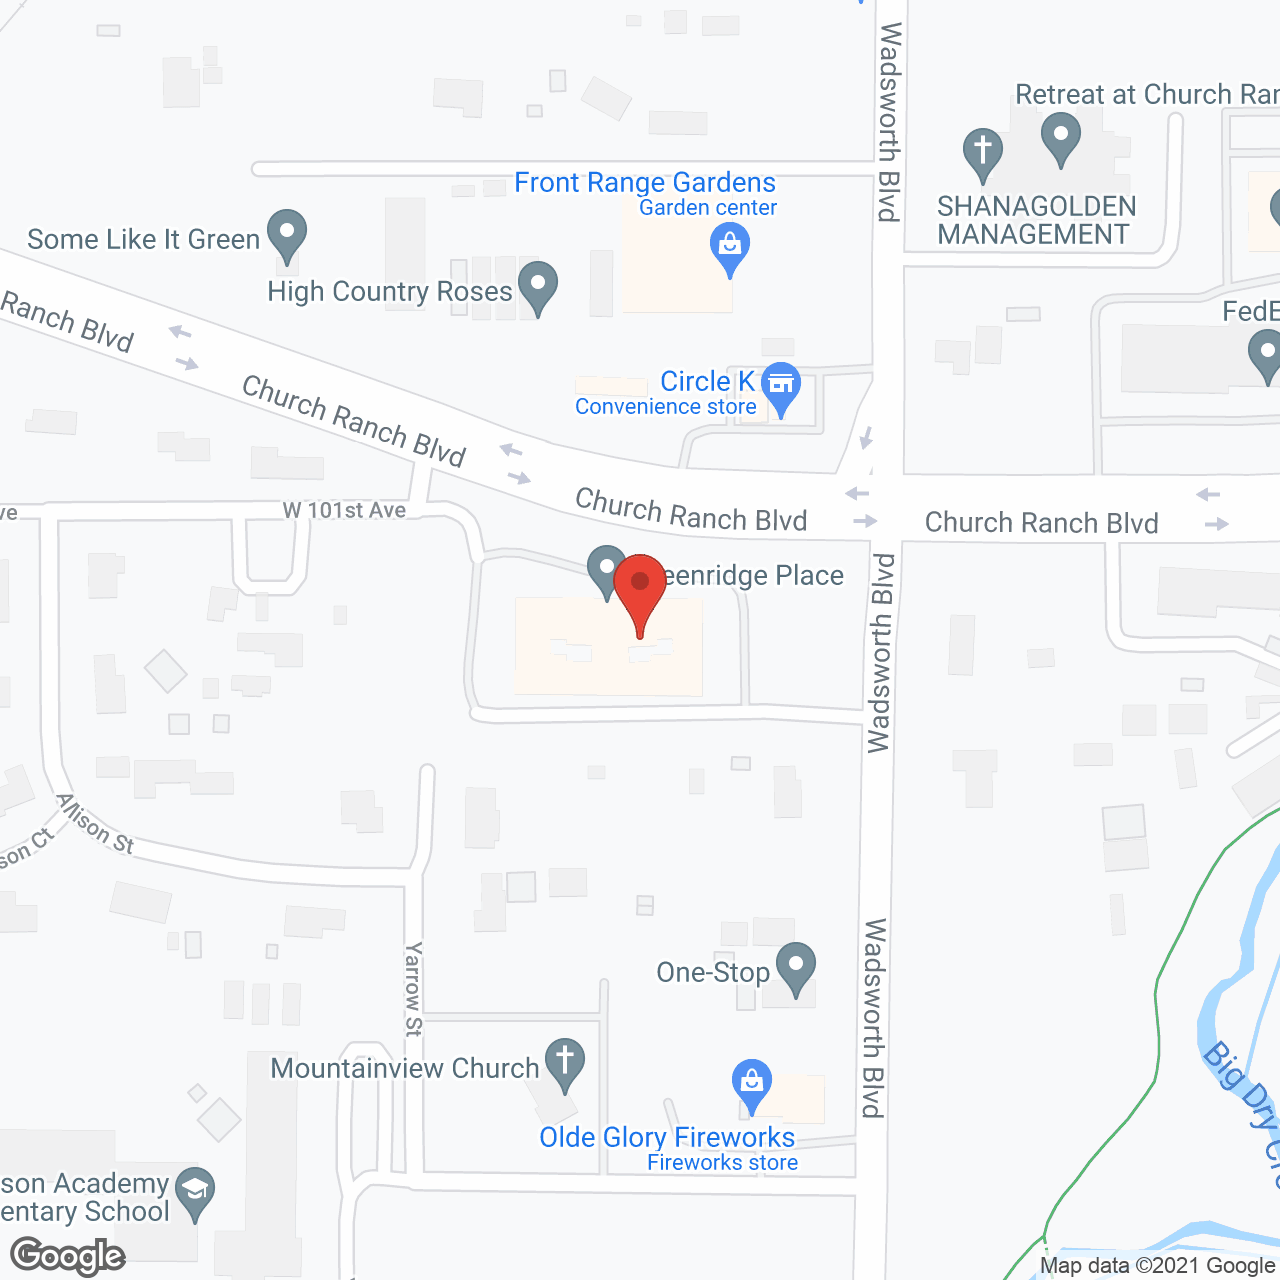 Greenridge Place in google map